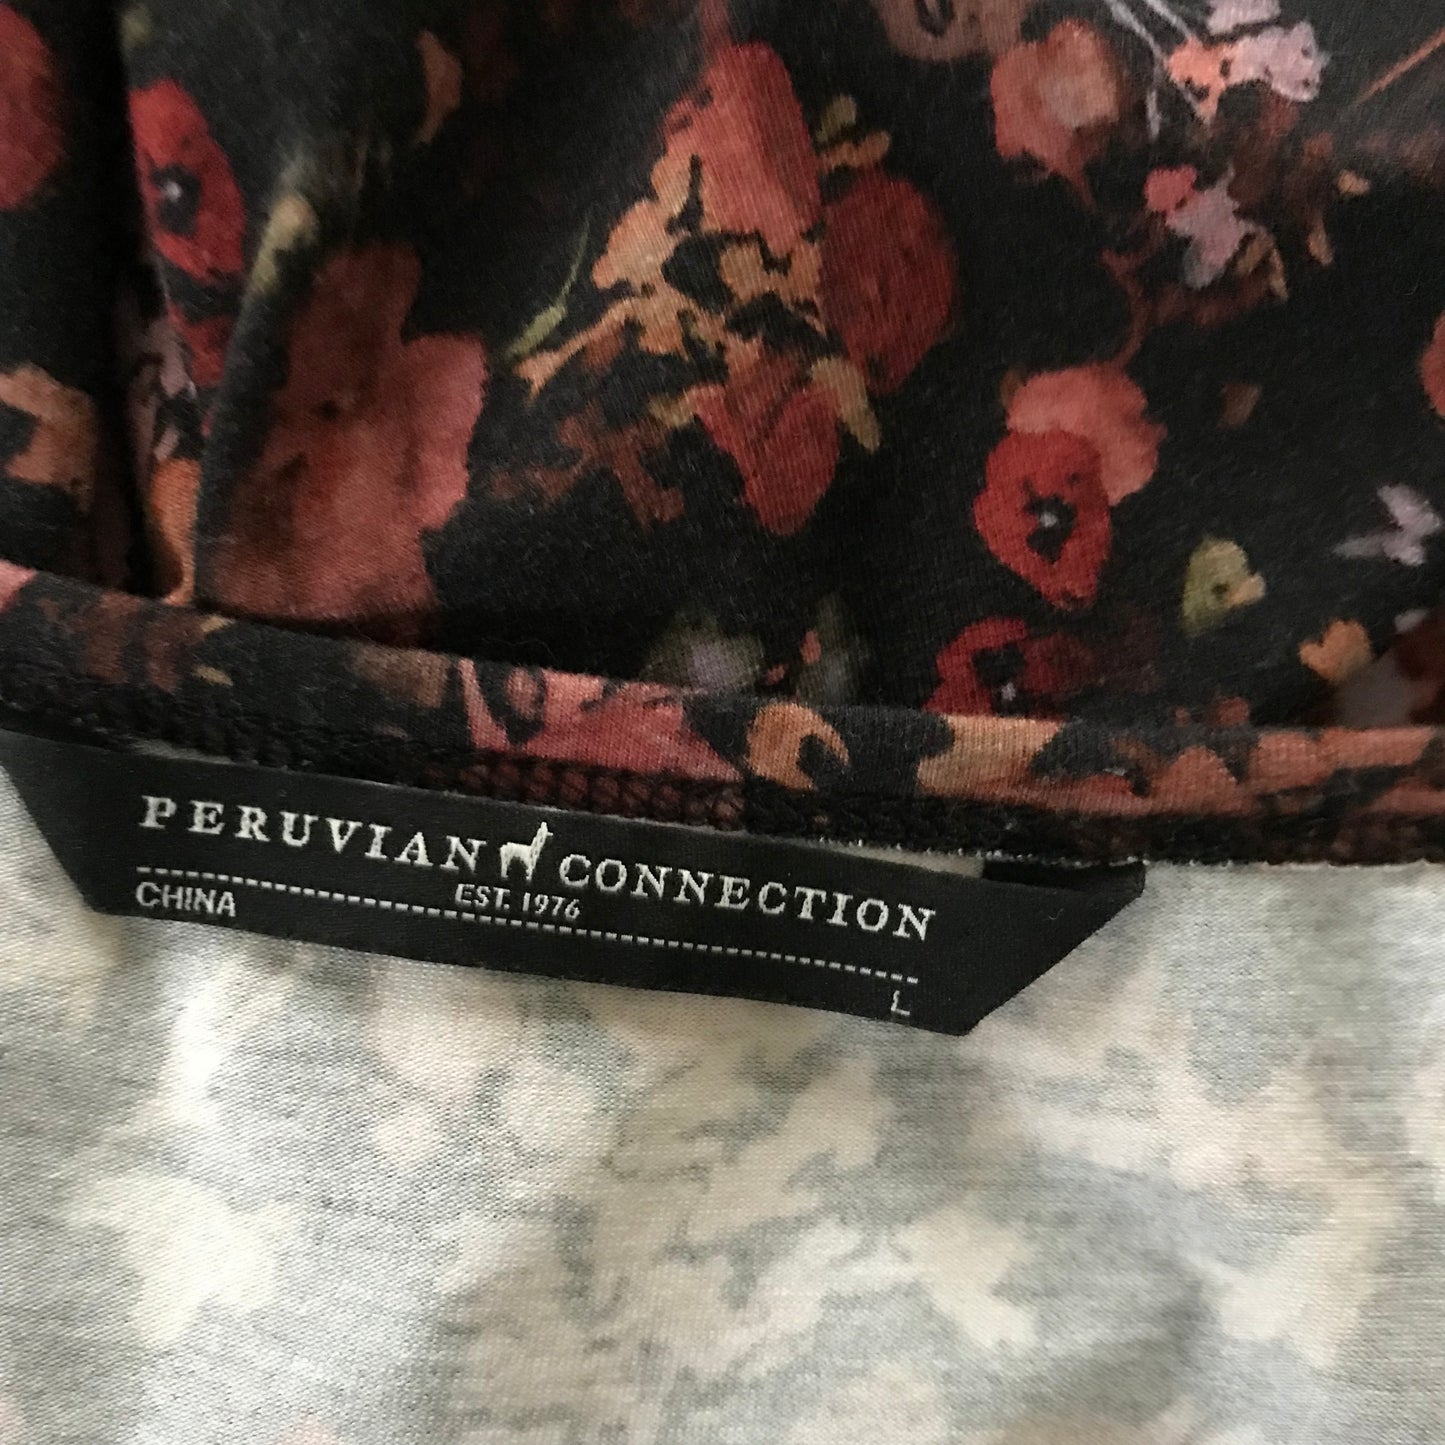 Peruvian Connection Black Floral Jersey Dress